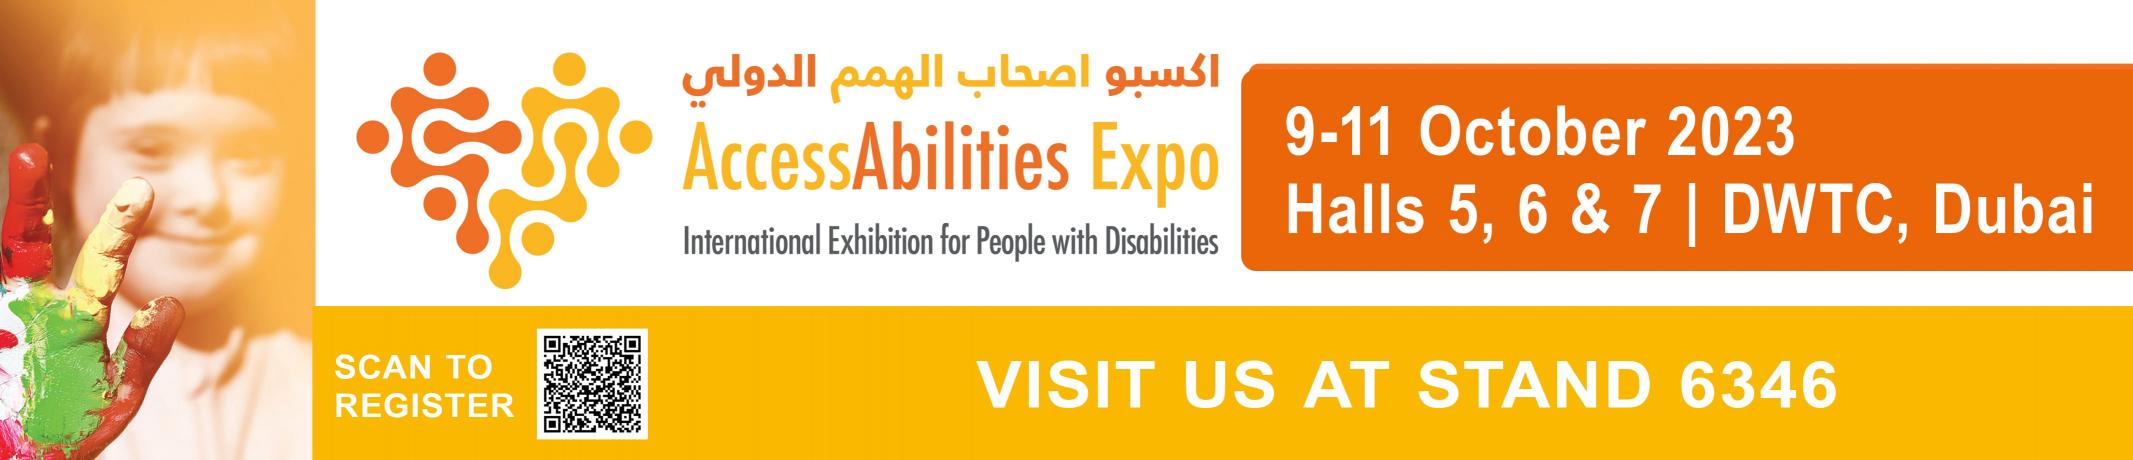 [AccessAbilities Expo 2023 in Dubai] image